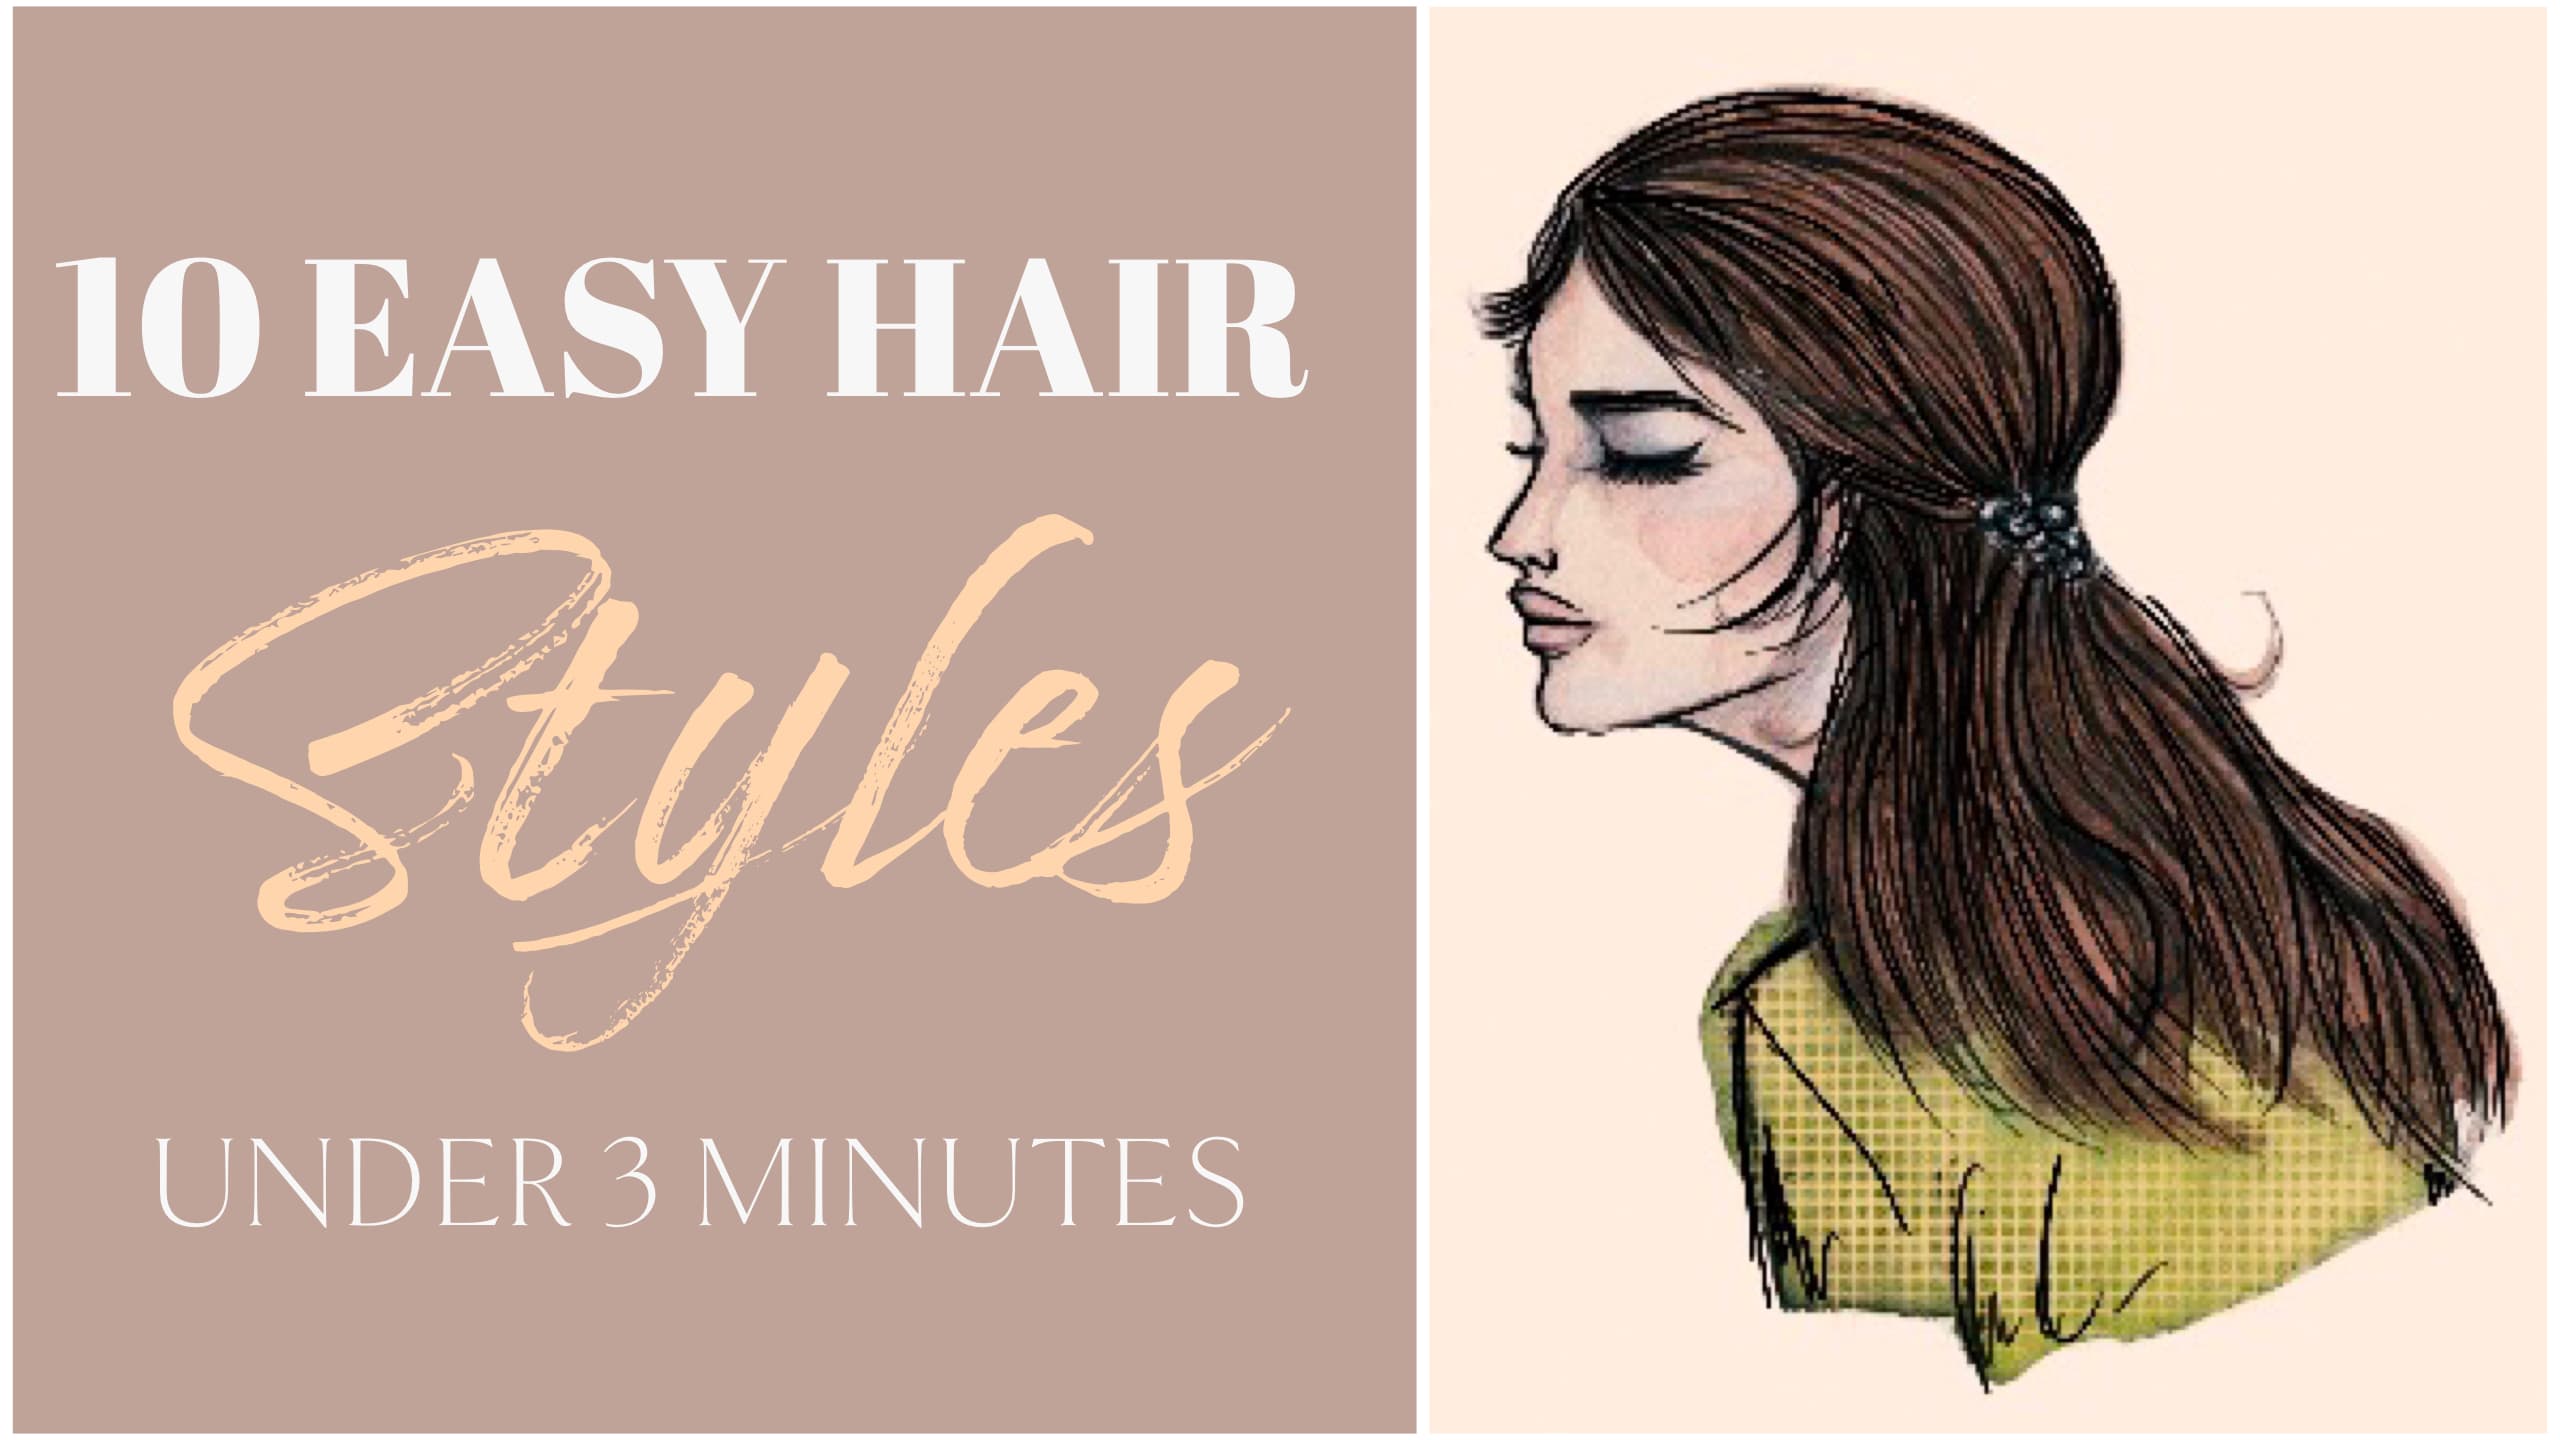 Easy self hairstyle for long hair girls| simple hairstyle| hairstyles| easy  hairstyle for long hair … | Long hair styles, Easy hairstyles for long  hair, Hair styles